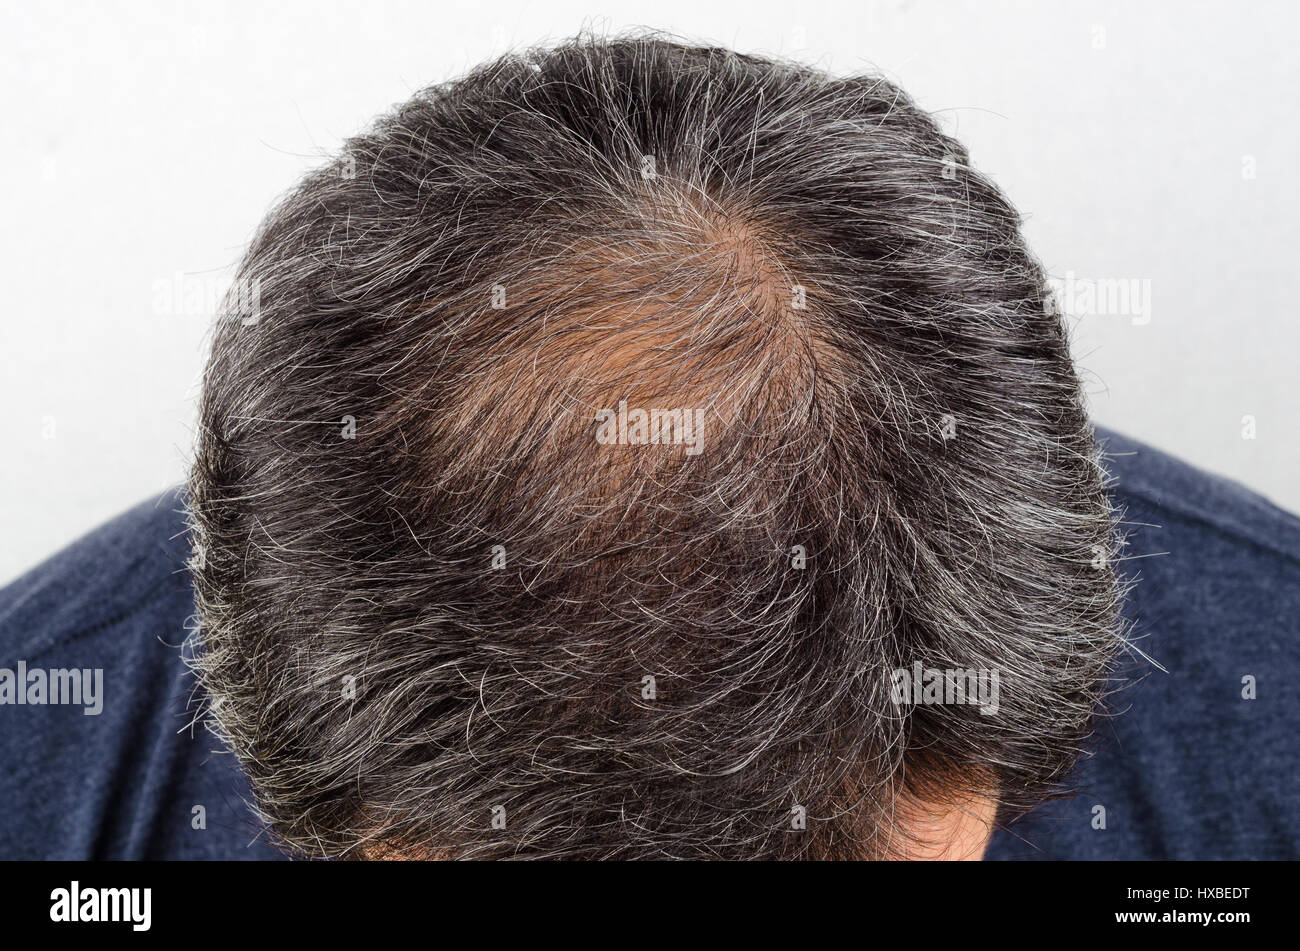 hair loss and grey hair, Male head with hair loss symptoms Stock Photo